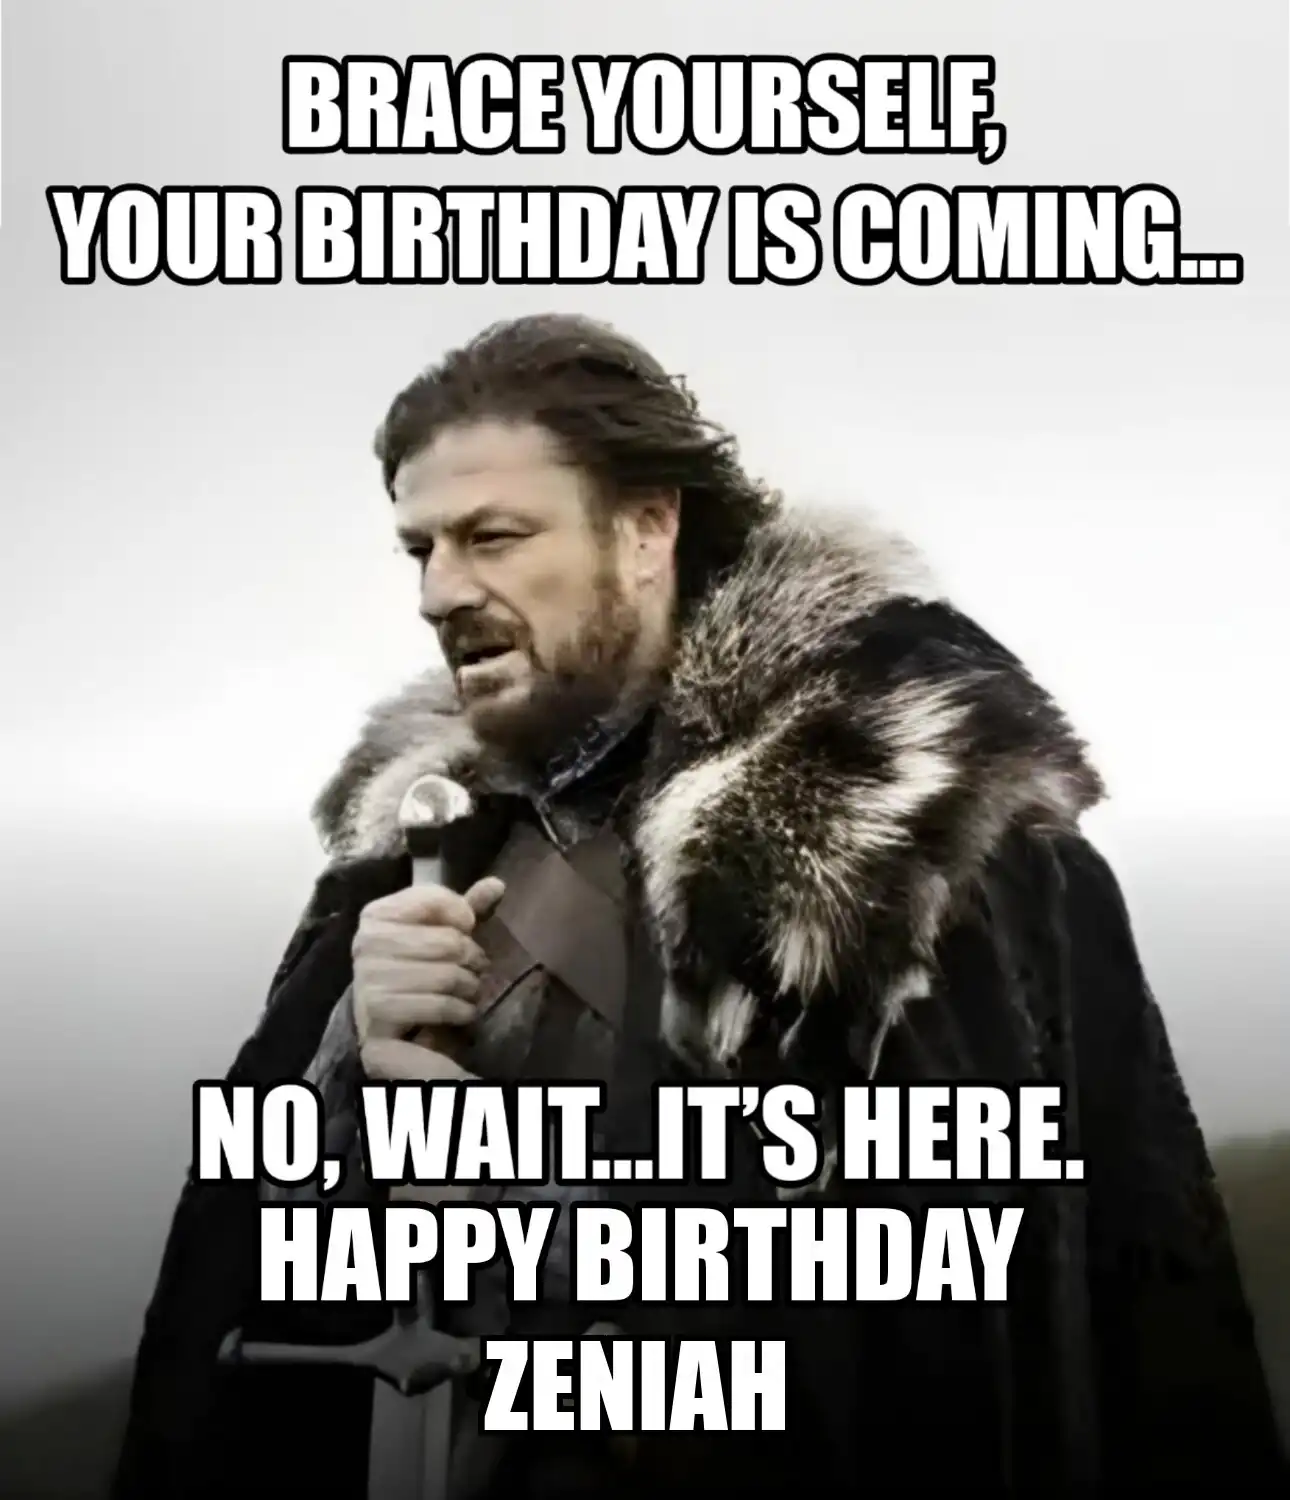 Happy Birthday Zeniah Brace Yourself Your Birthday Is Coming Meme